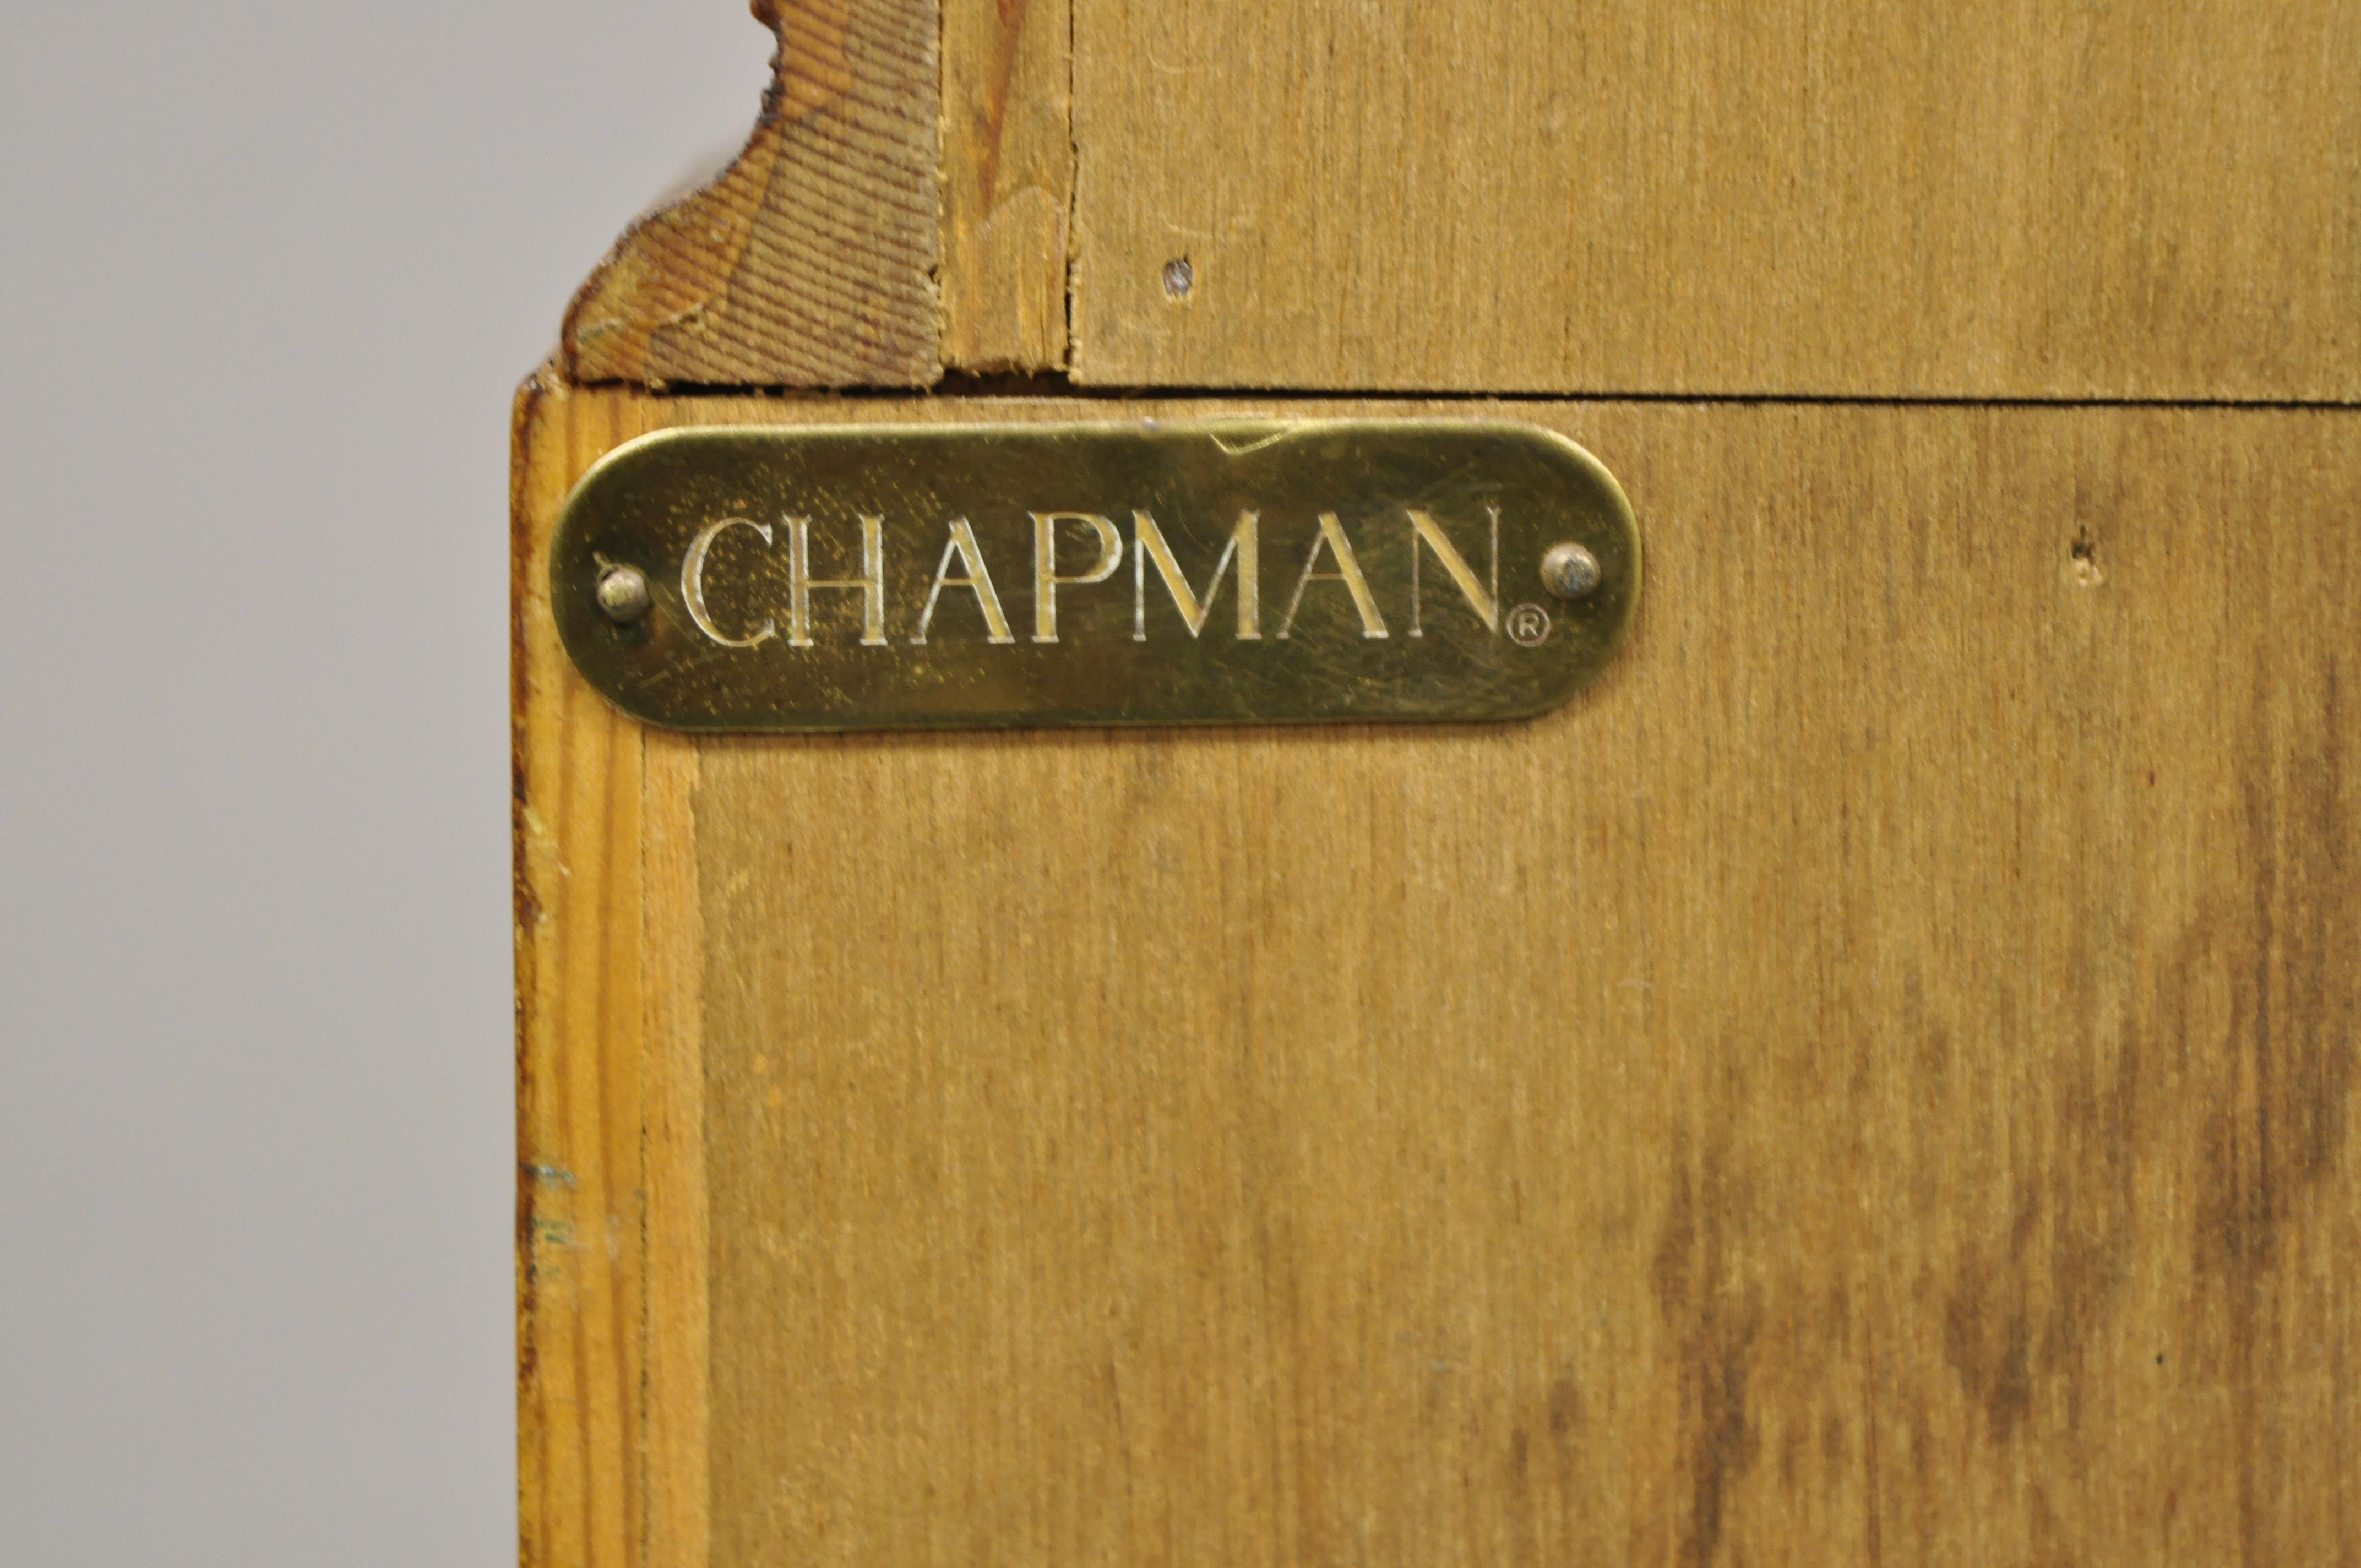 Vintage Chapman Longcase Grandfather Grandaughter Kiefernholz-Etuiuhr, Spanien im Angebot 5